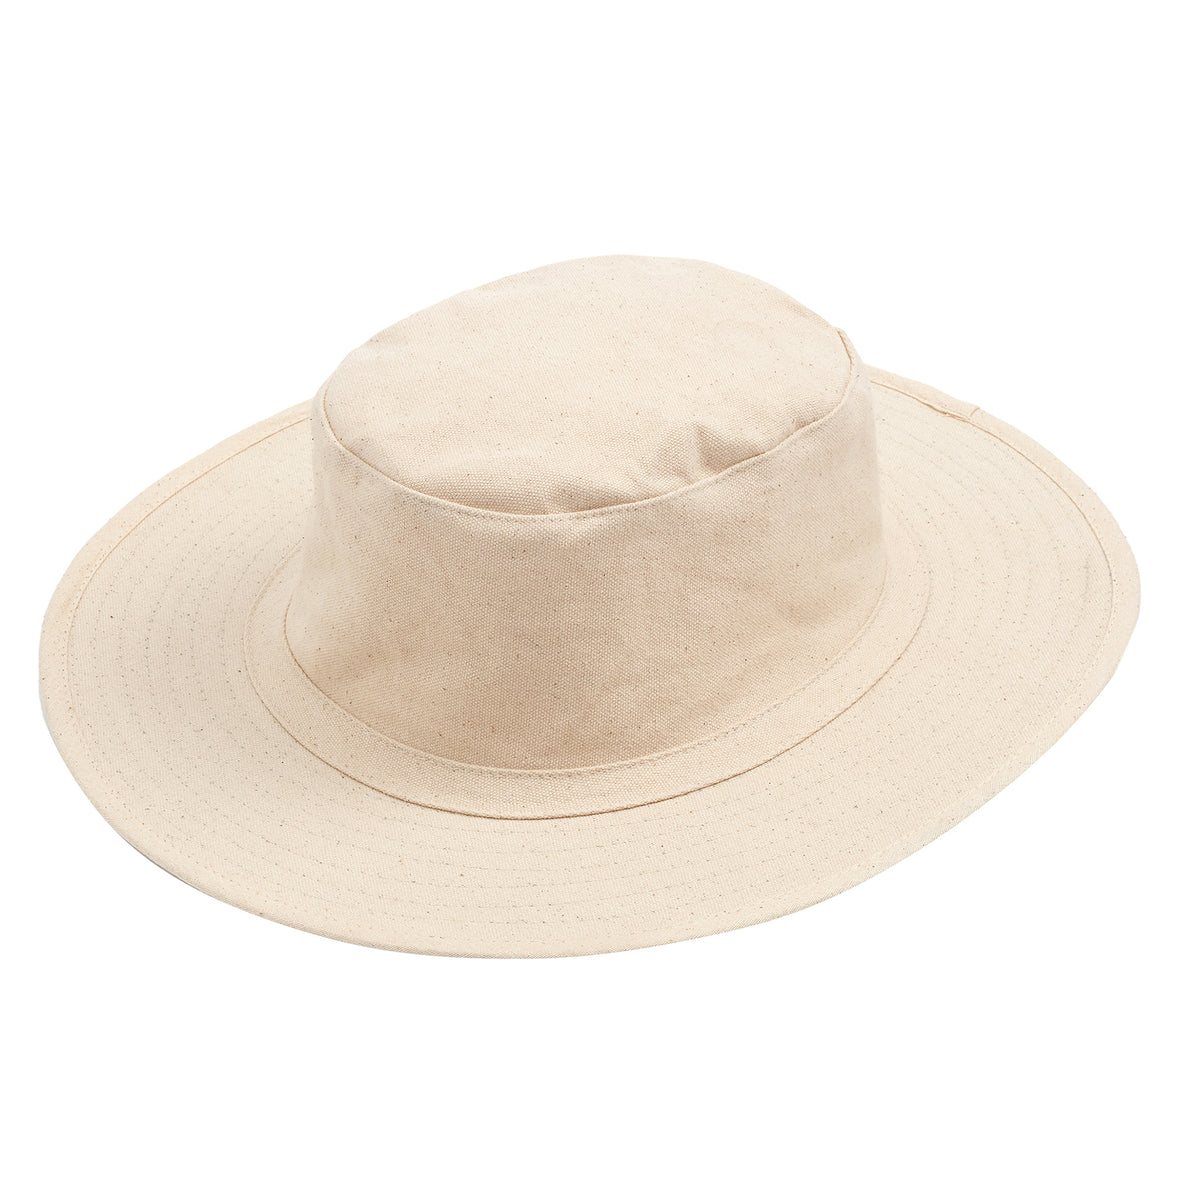 Salamander Sun Hat: Cream